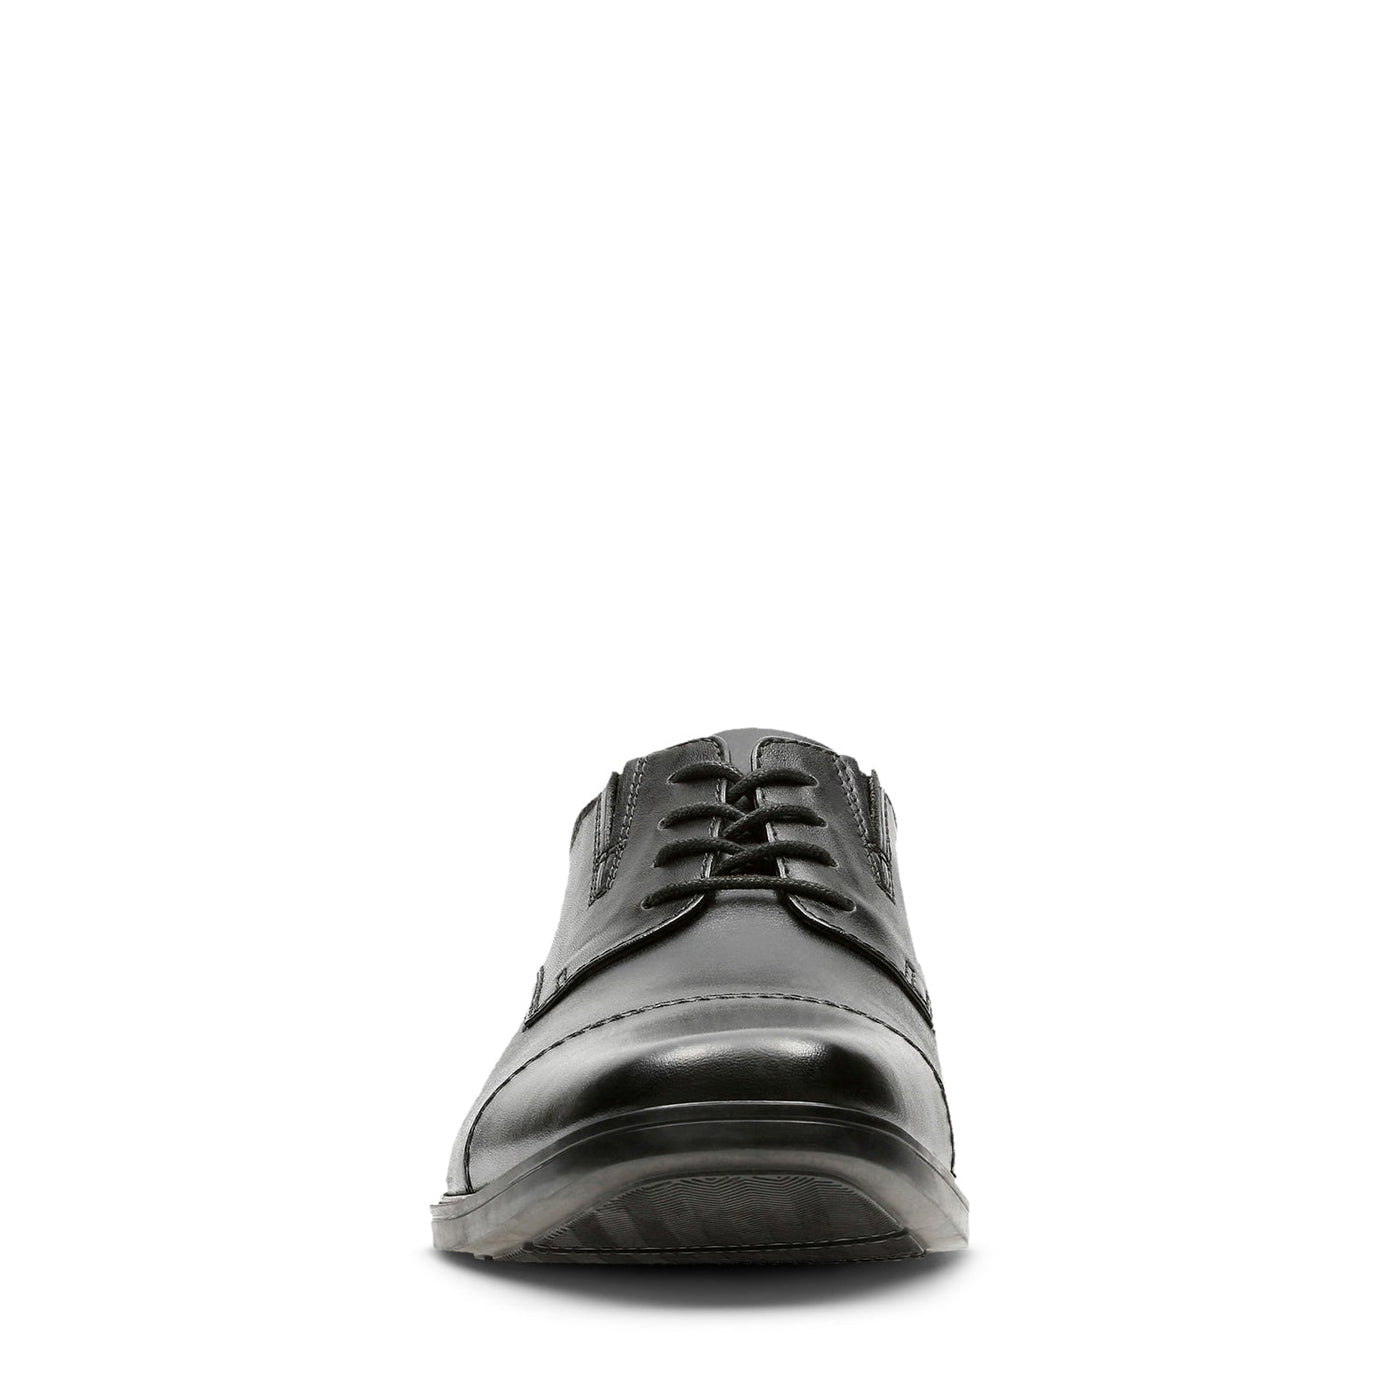 Mens - Tilden Cap     Black Leather